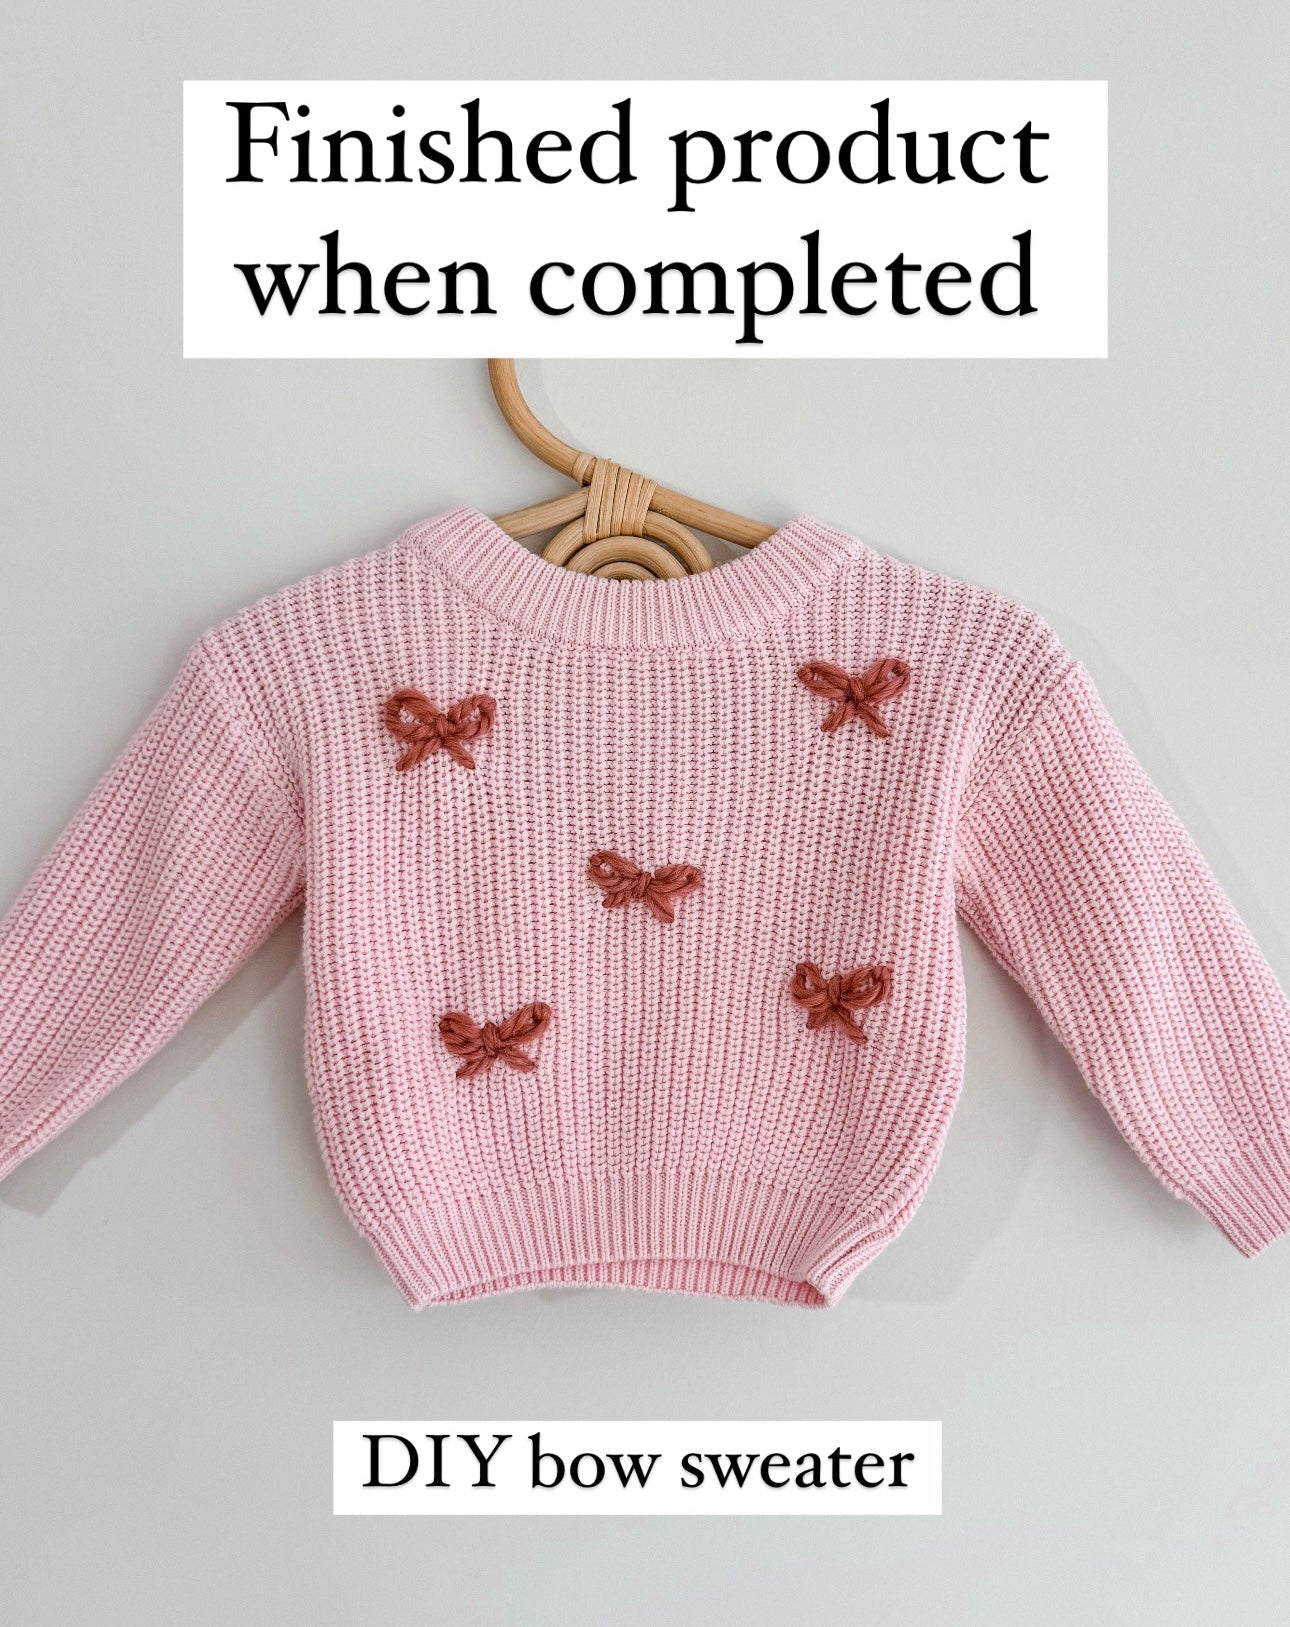 DIY bow sweater kit